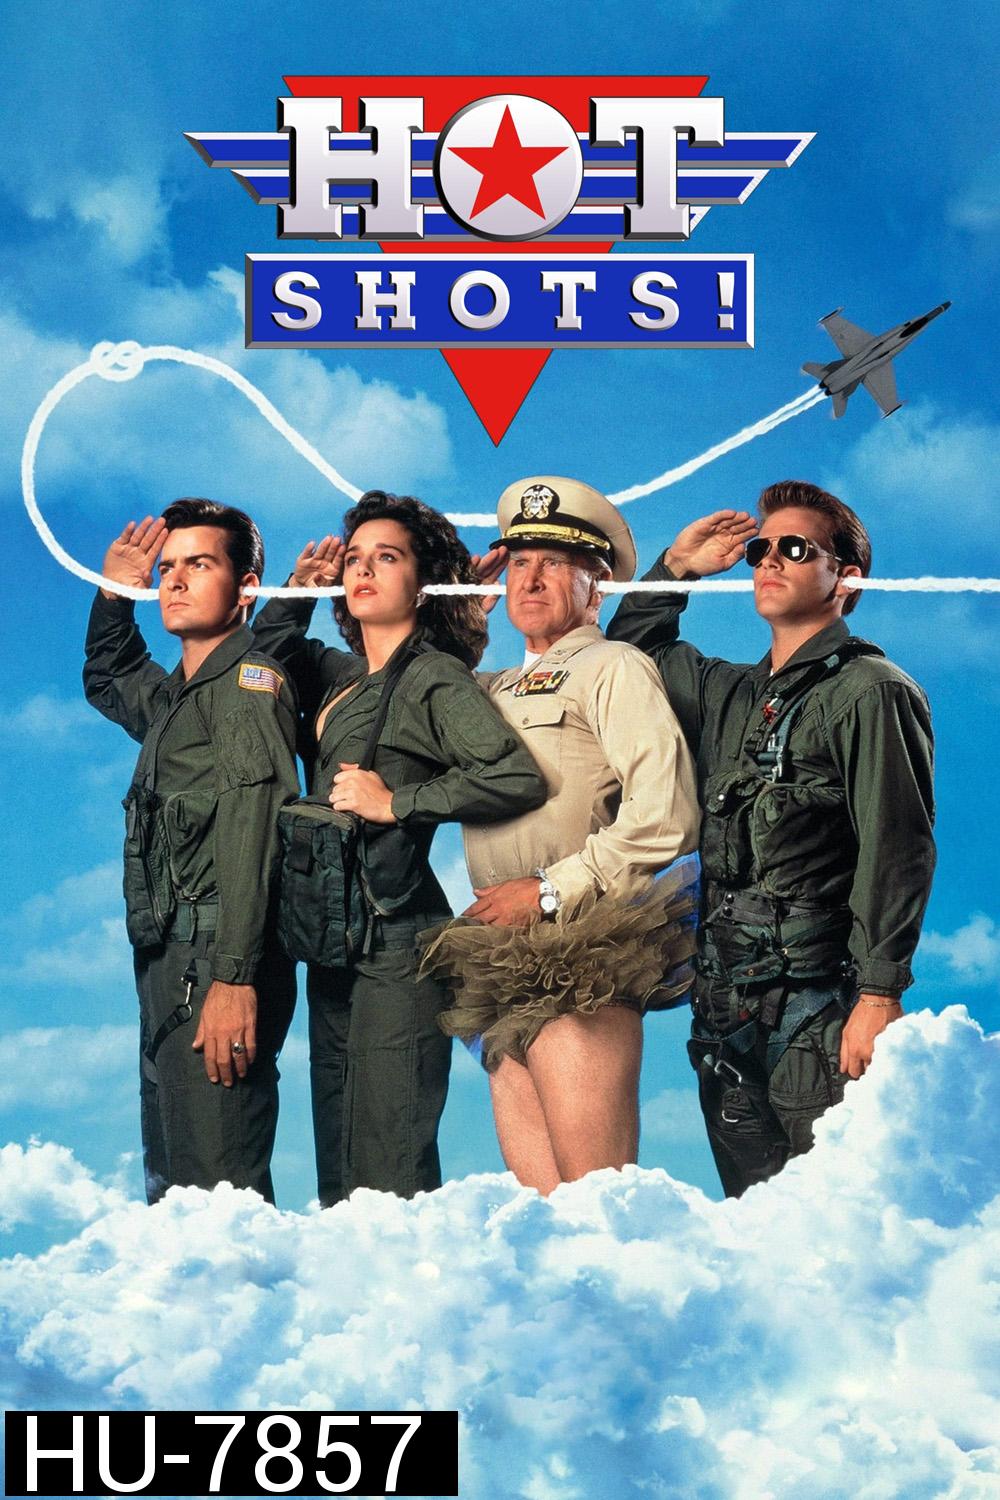 Hot Shots 1 ฮ็อตช็อต 1 เสืออากาศจิตป่วน (1991)